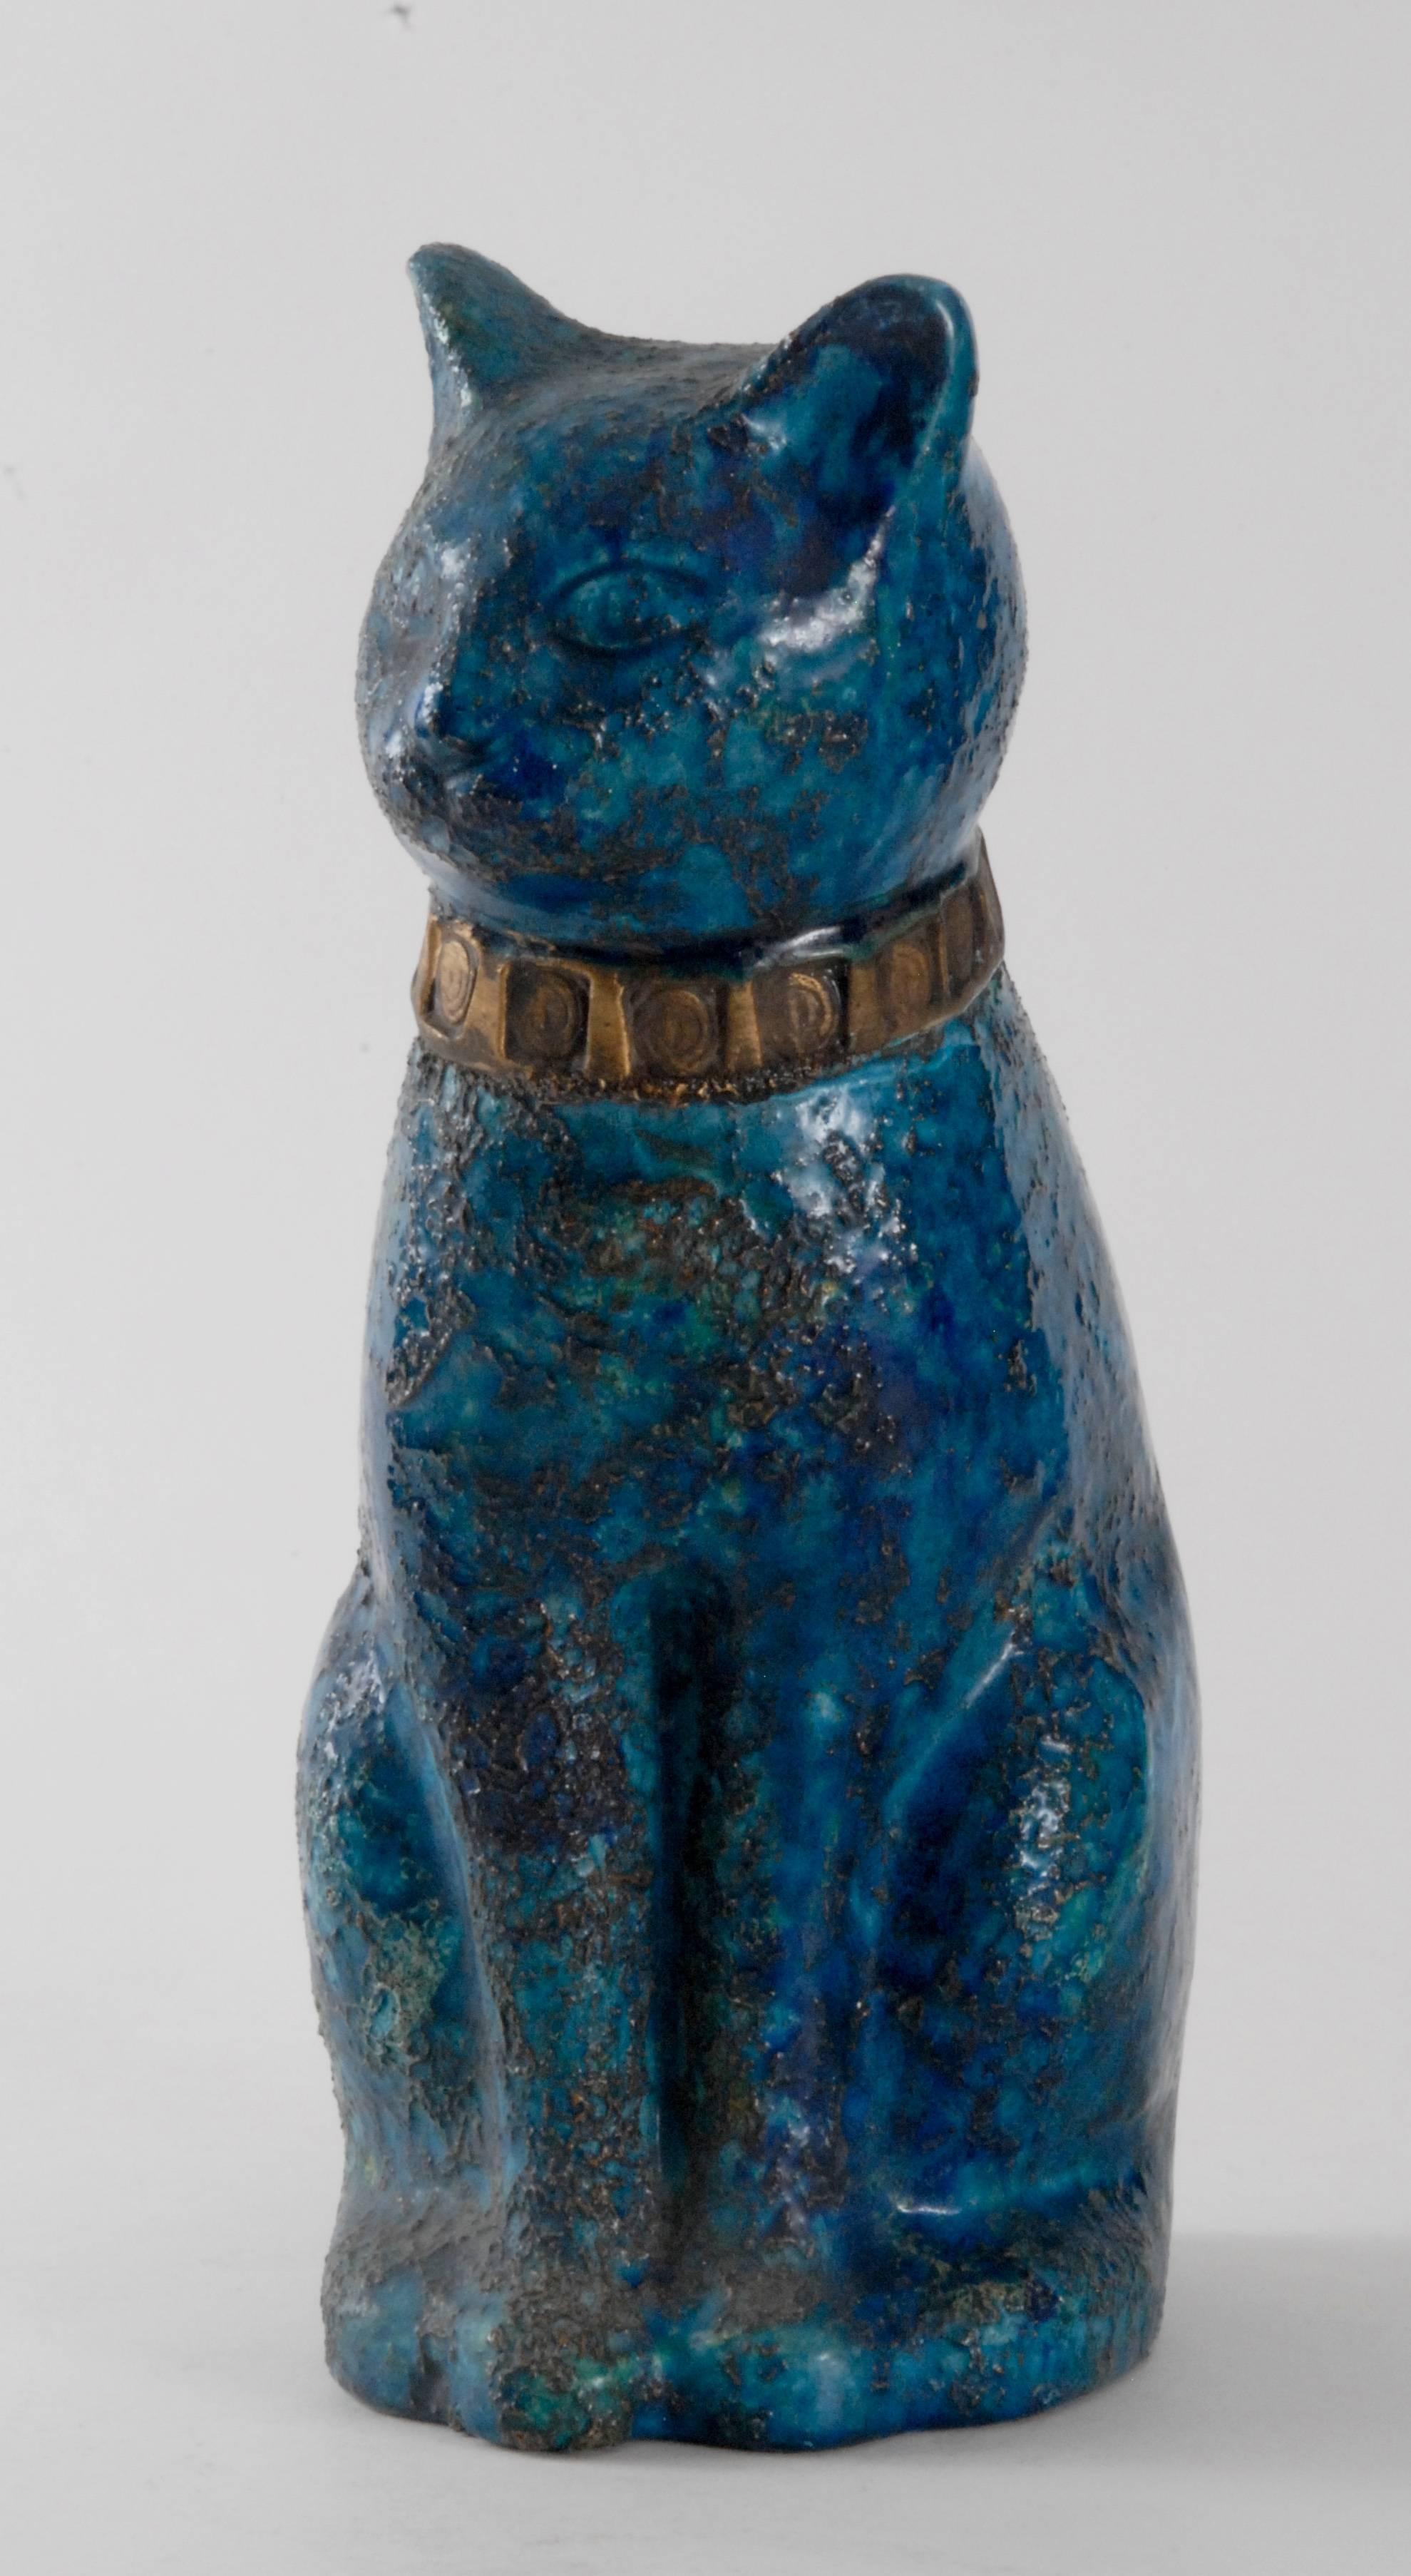 An Aldo Londi designed 'Cinese' blue glaze large sitting cat with a gold Greek key collar.